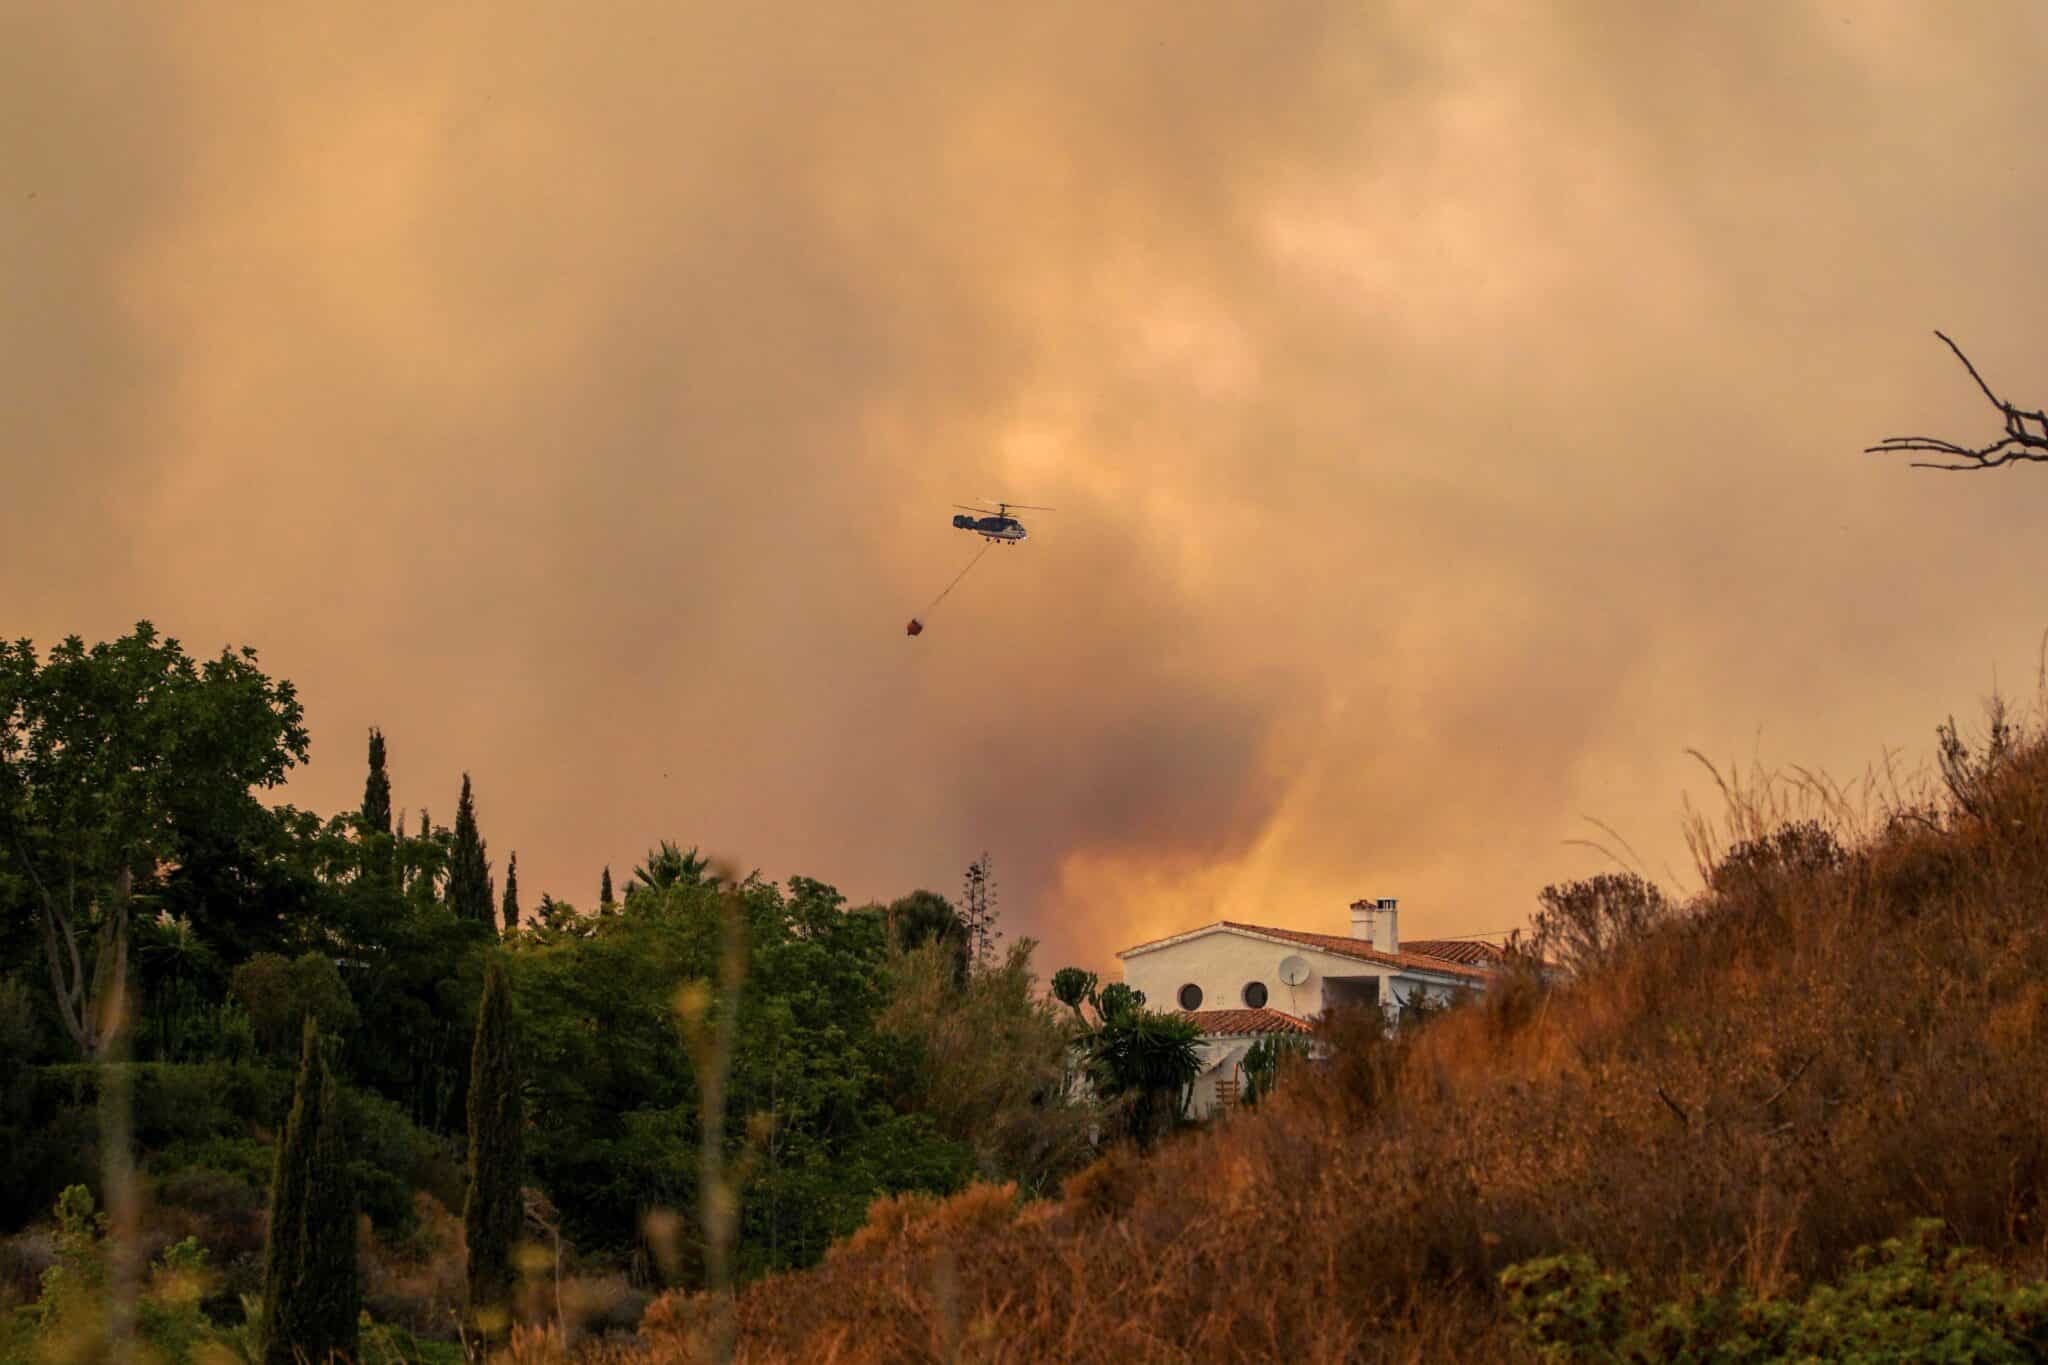 El fuego en Sierra Bermeja afecta ya a 3.600 hectáreas